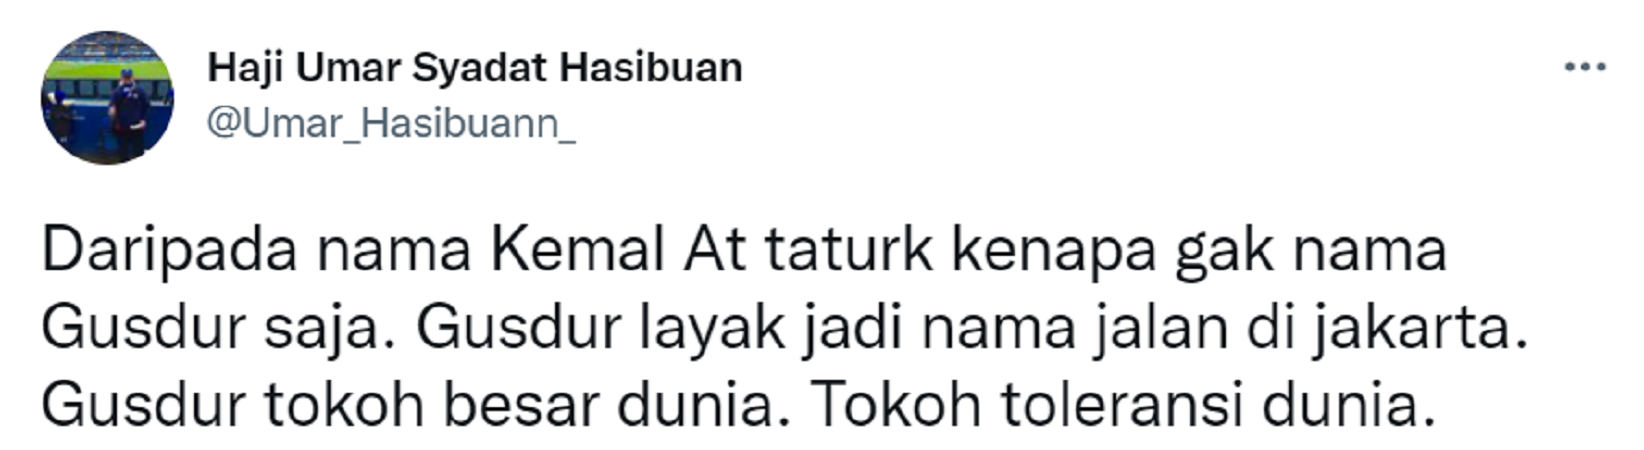 Cuitan Gus Umar mengenai usulan nama jalan di Jakarta.